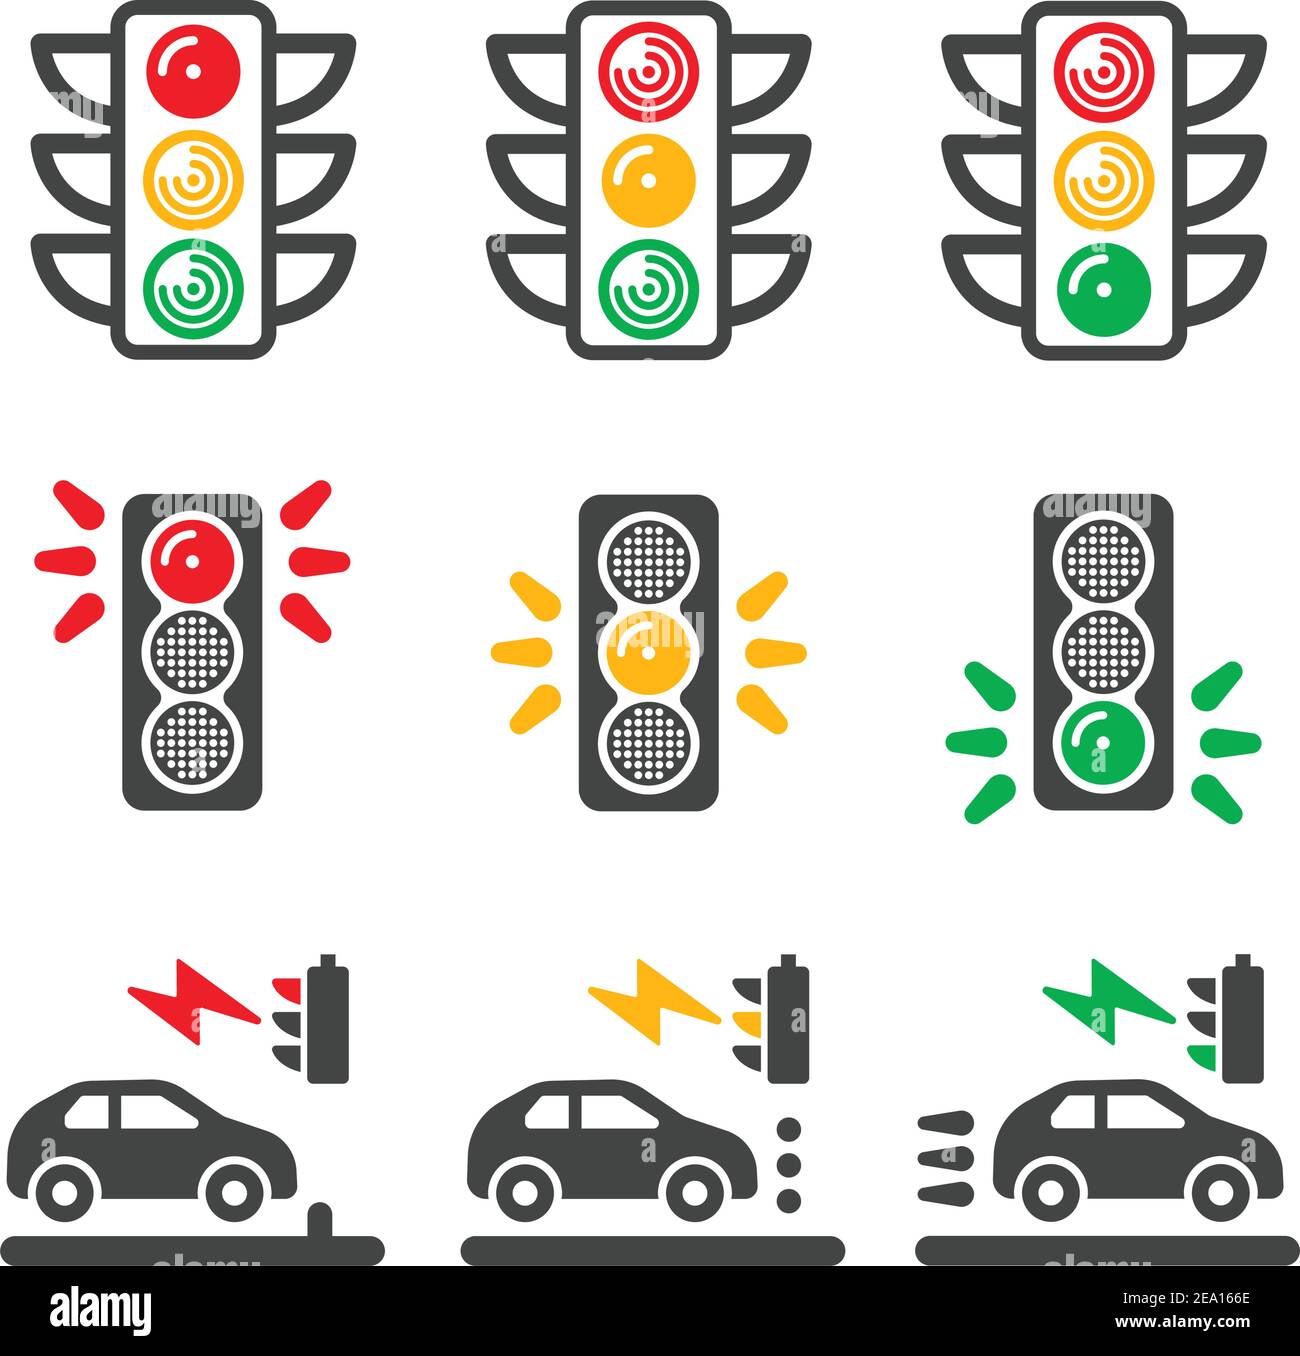 traffic light icon set Stock Vector